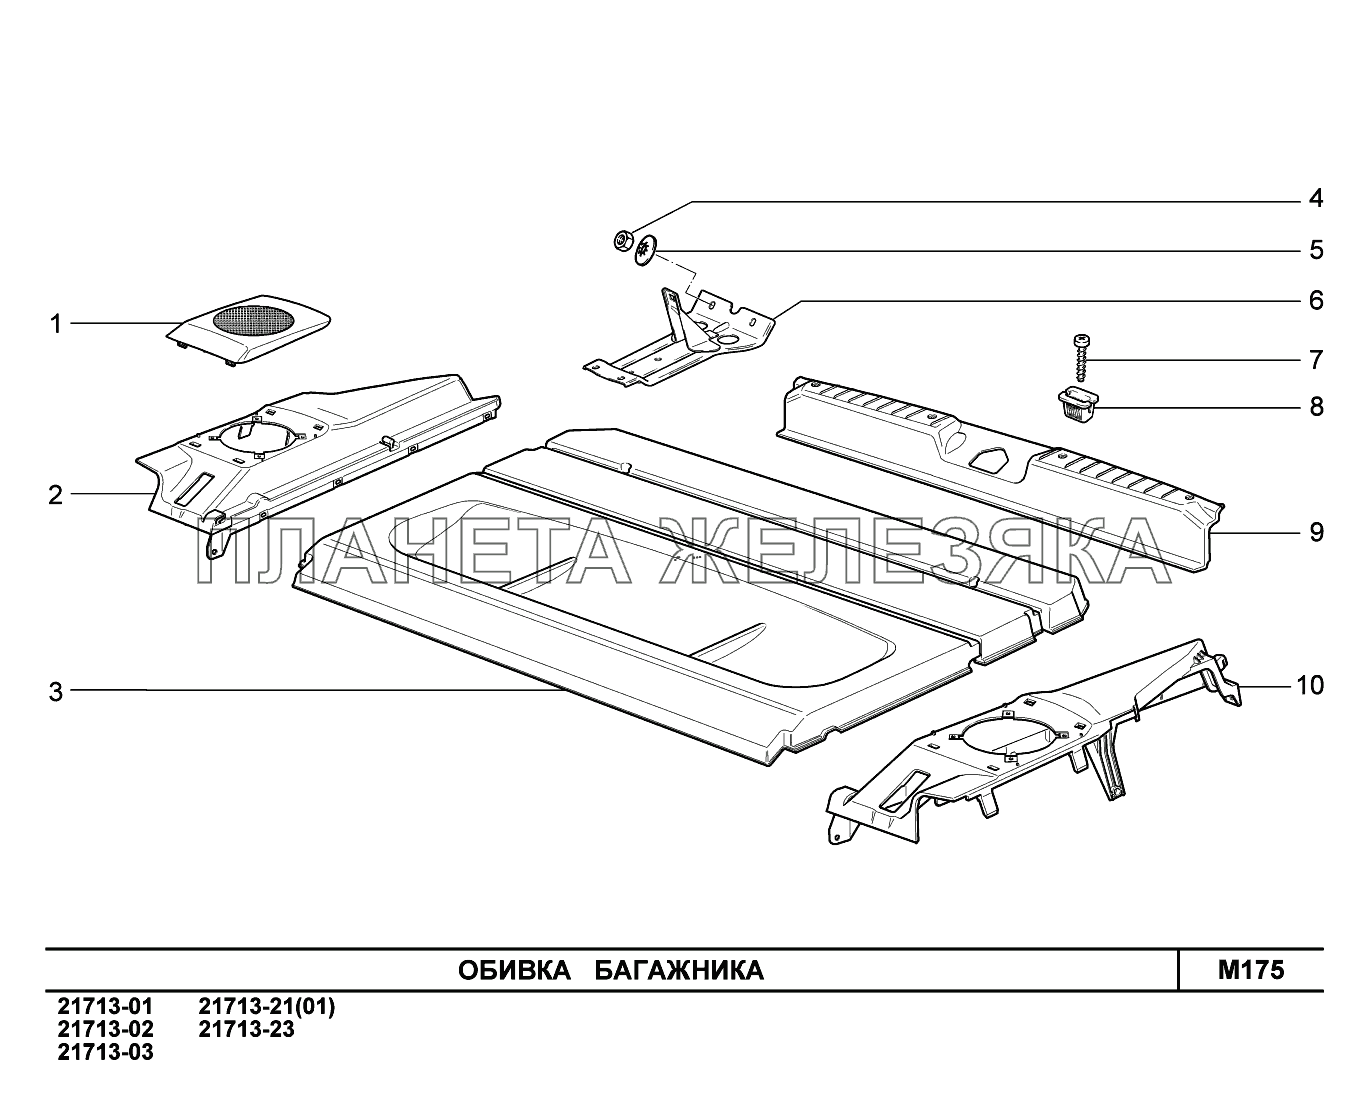 M175. Обивка багажника ВАЗ-2170 